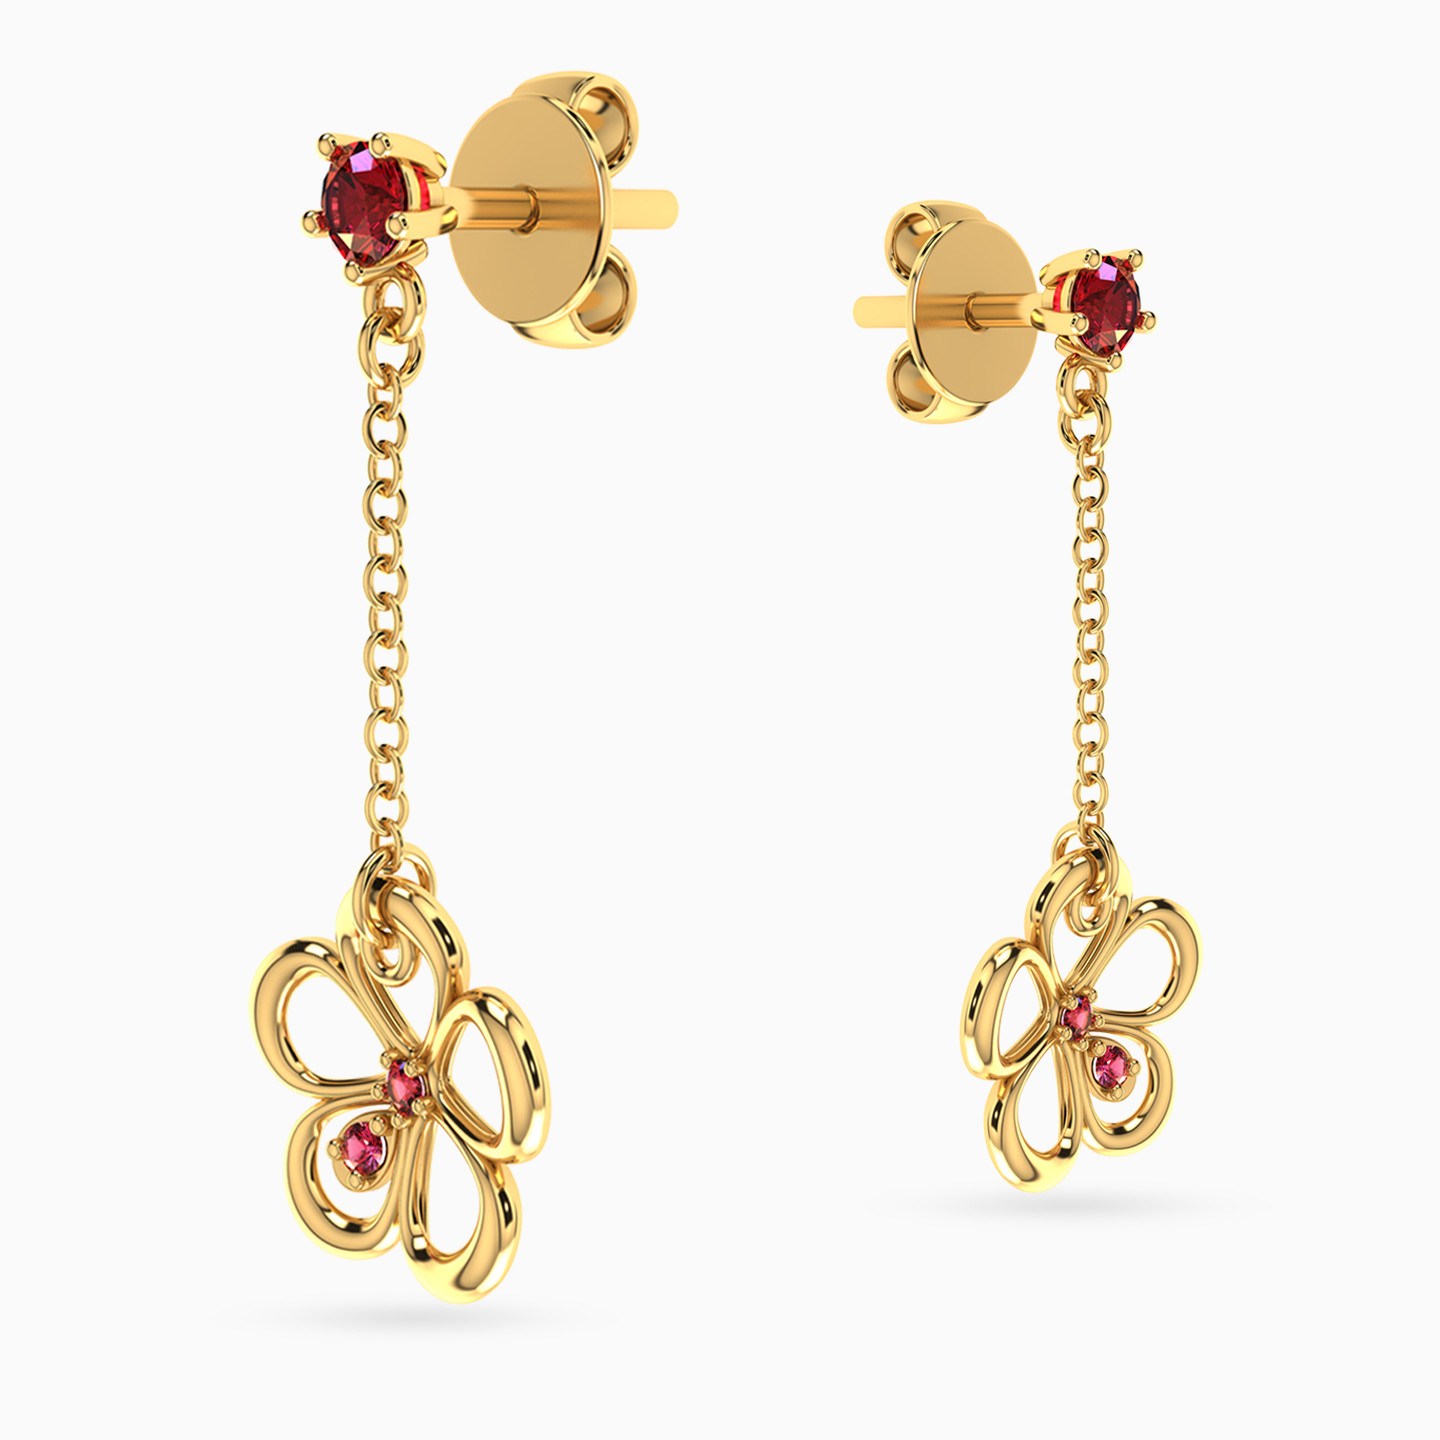 Flower Shaped Colored Stones Drop Earrings in 18K Gold - 3